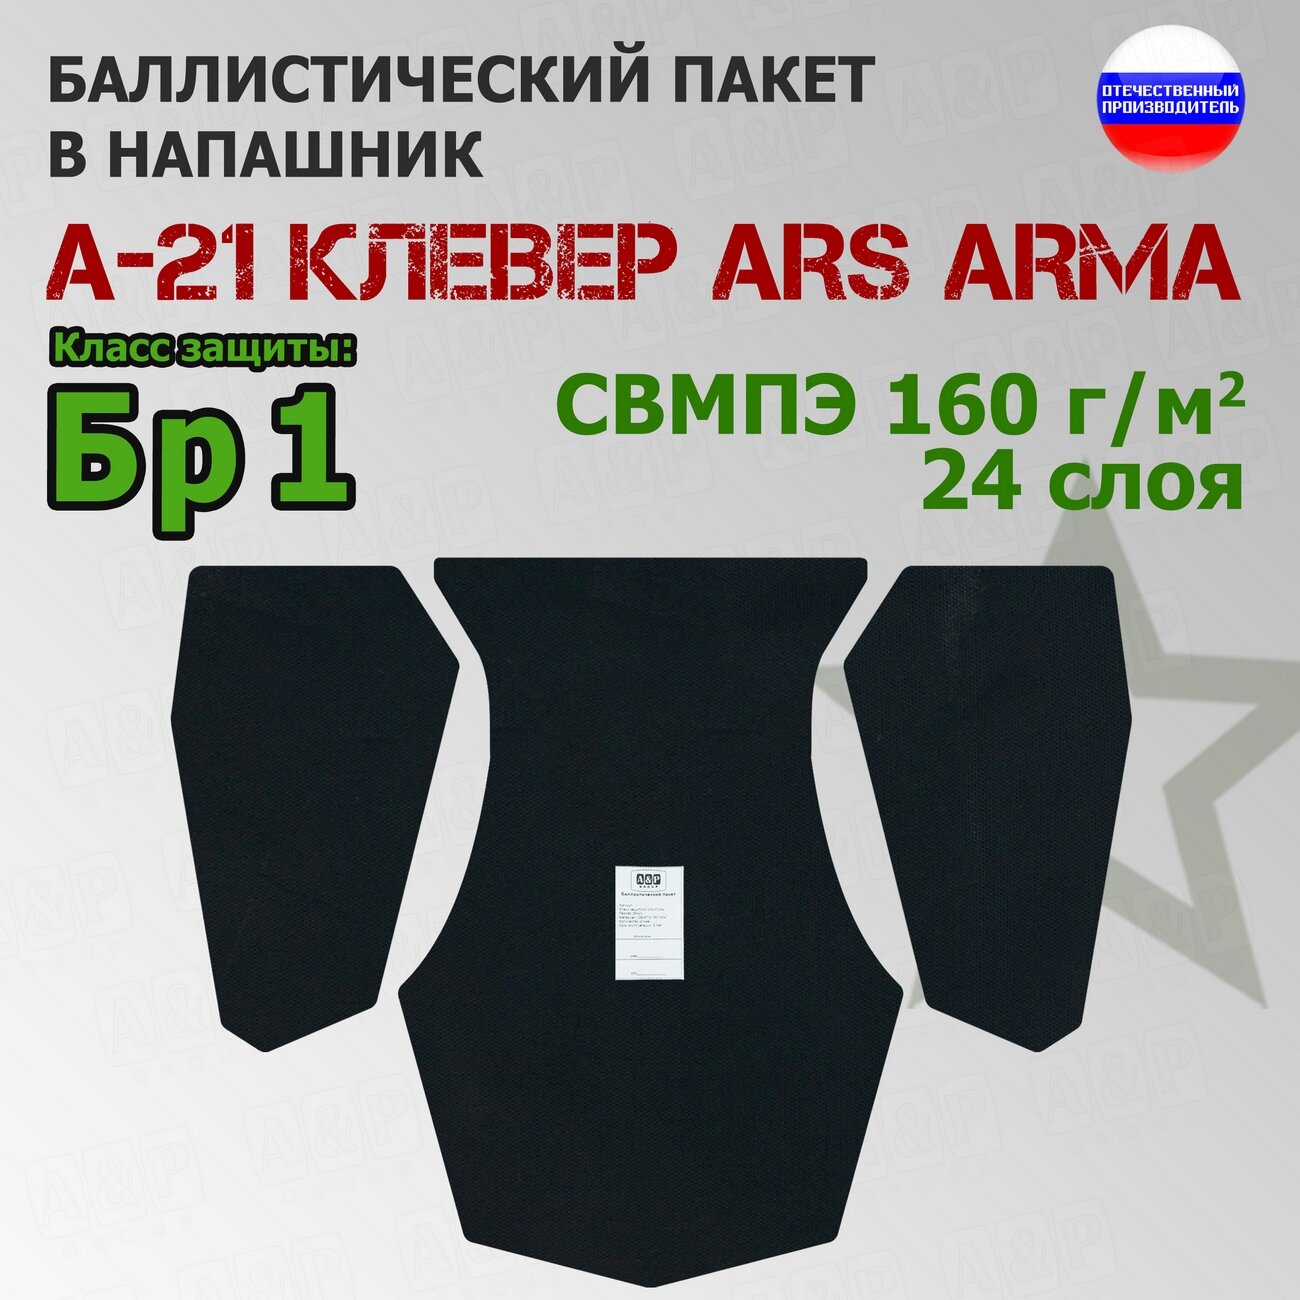 Баллистический пакет в напашник А-21 Клевер Ars Arma. Класс защитной структуры Бр 1.